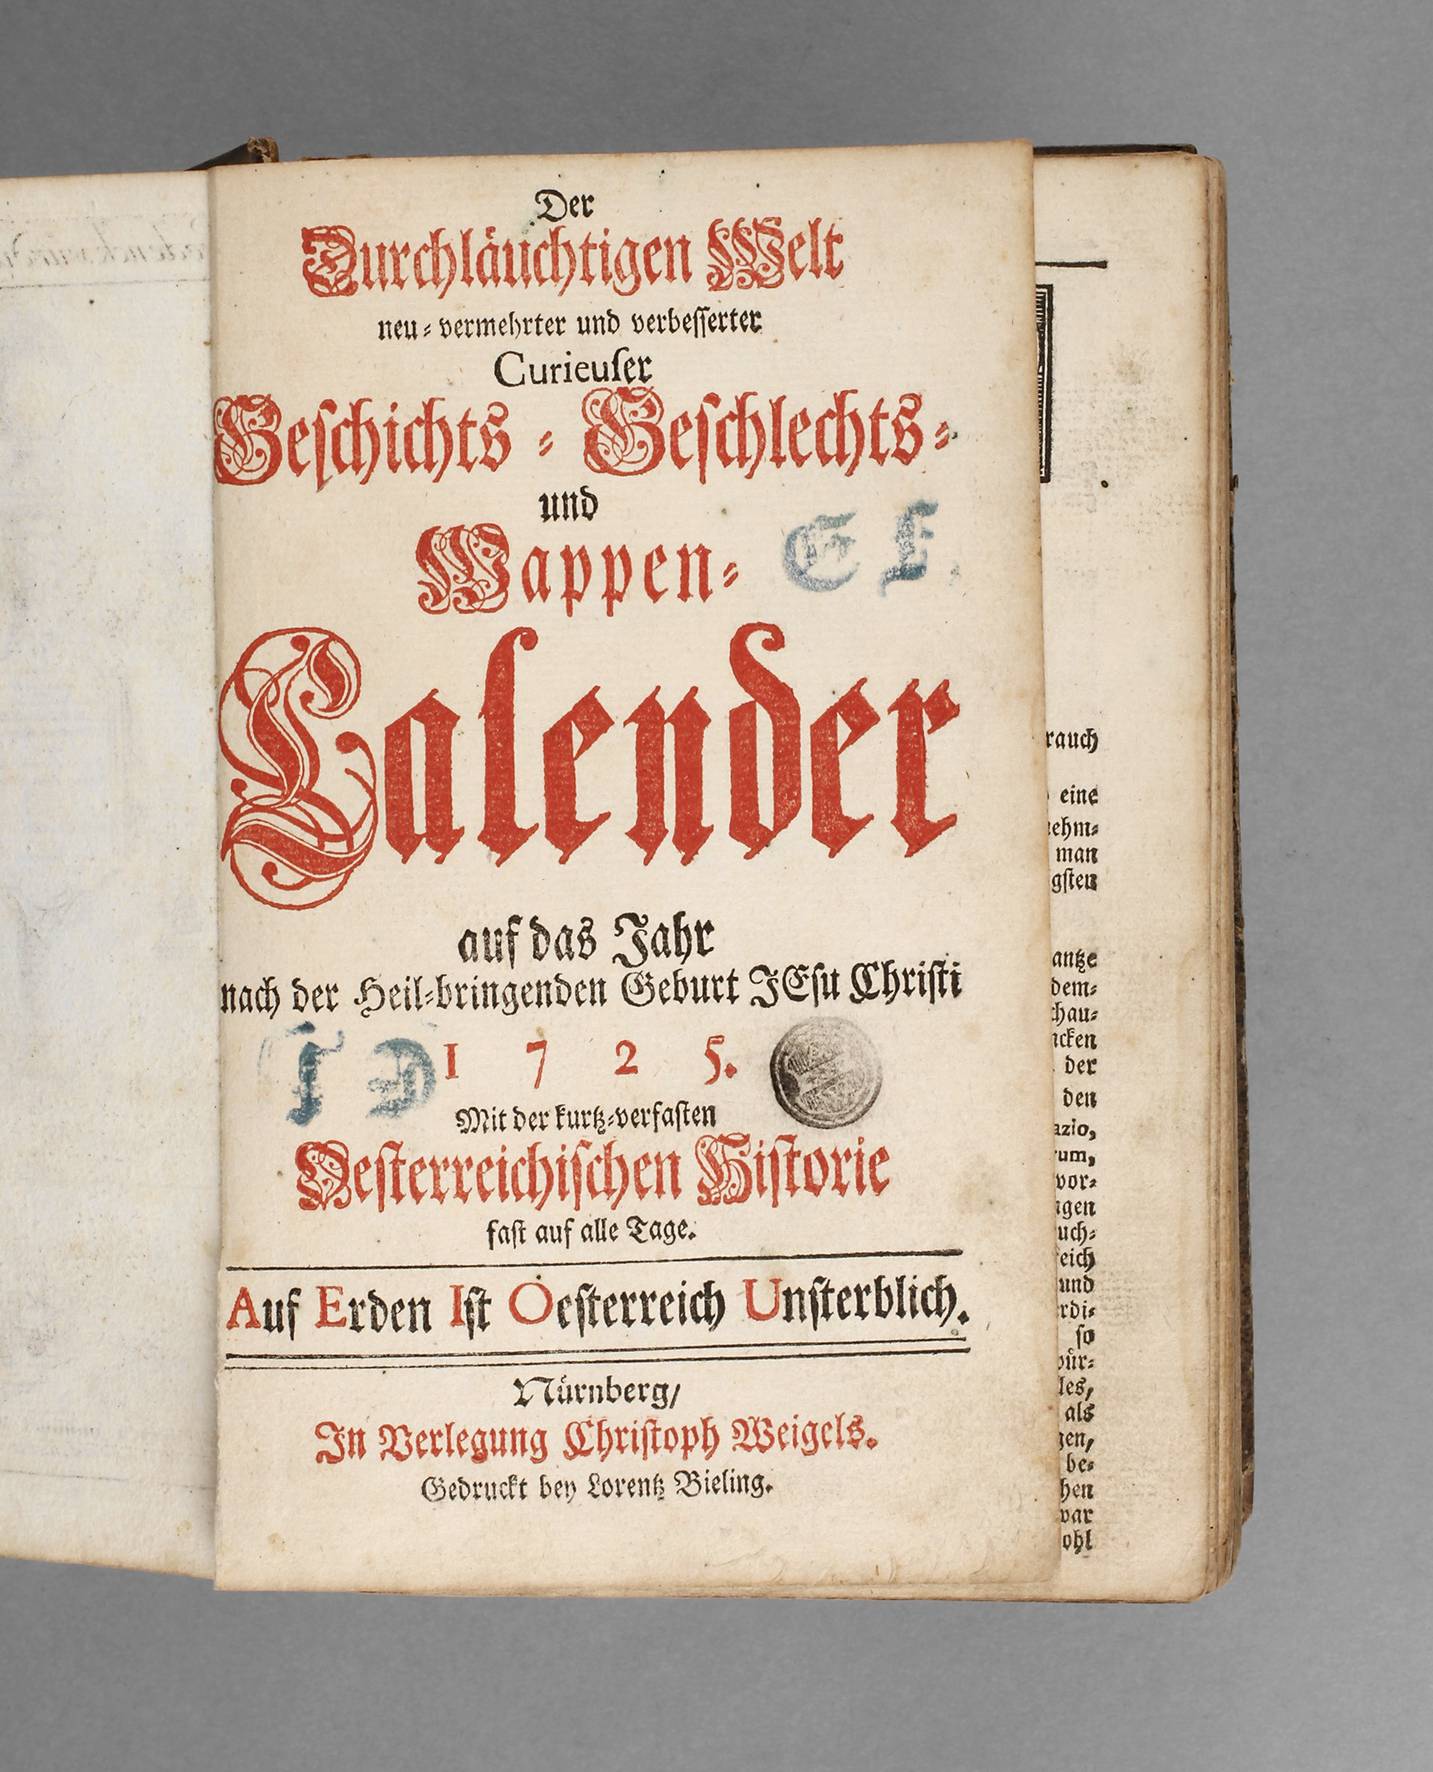 Geschlechts- und Wappenkalender 1725